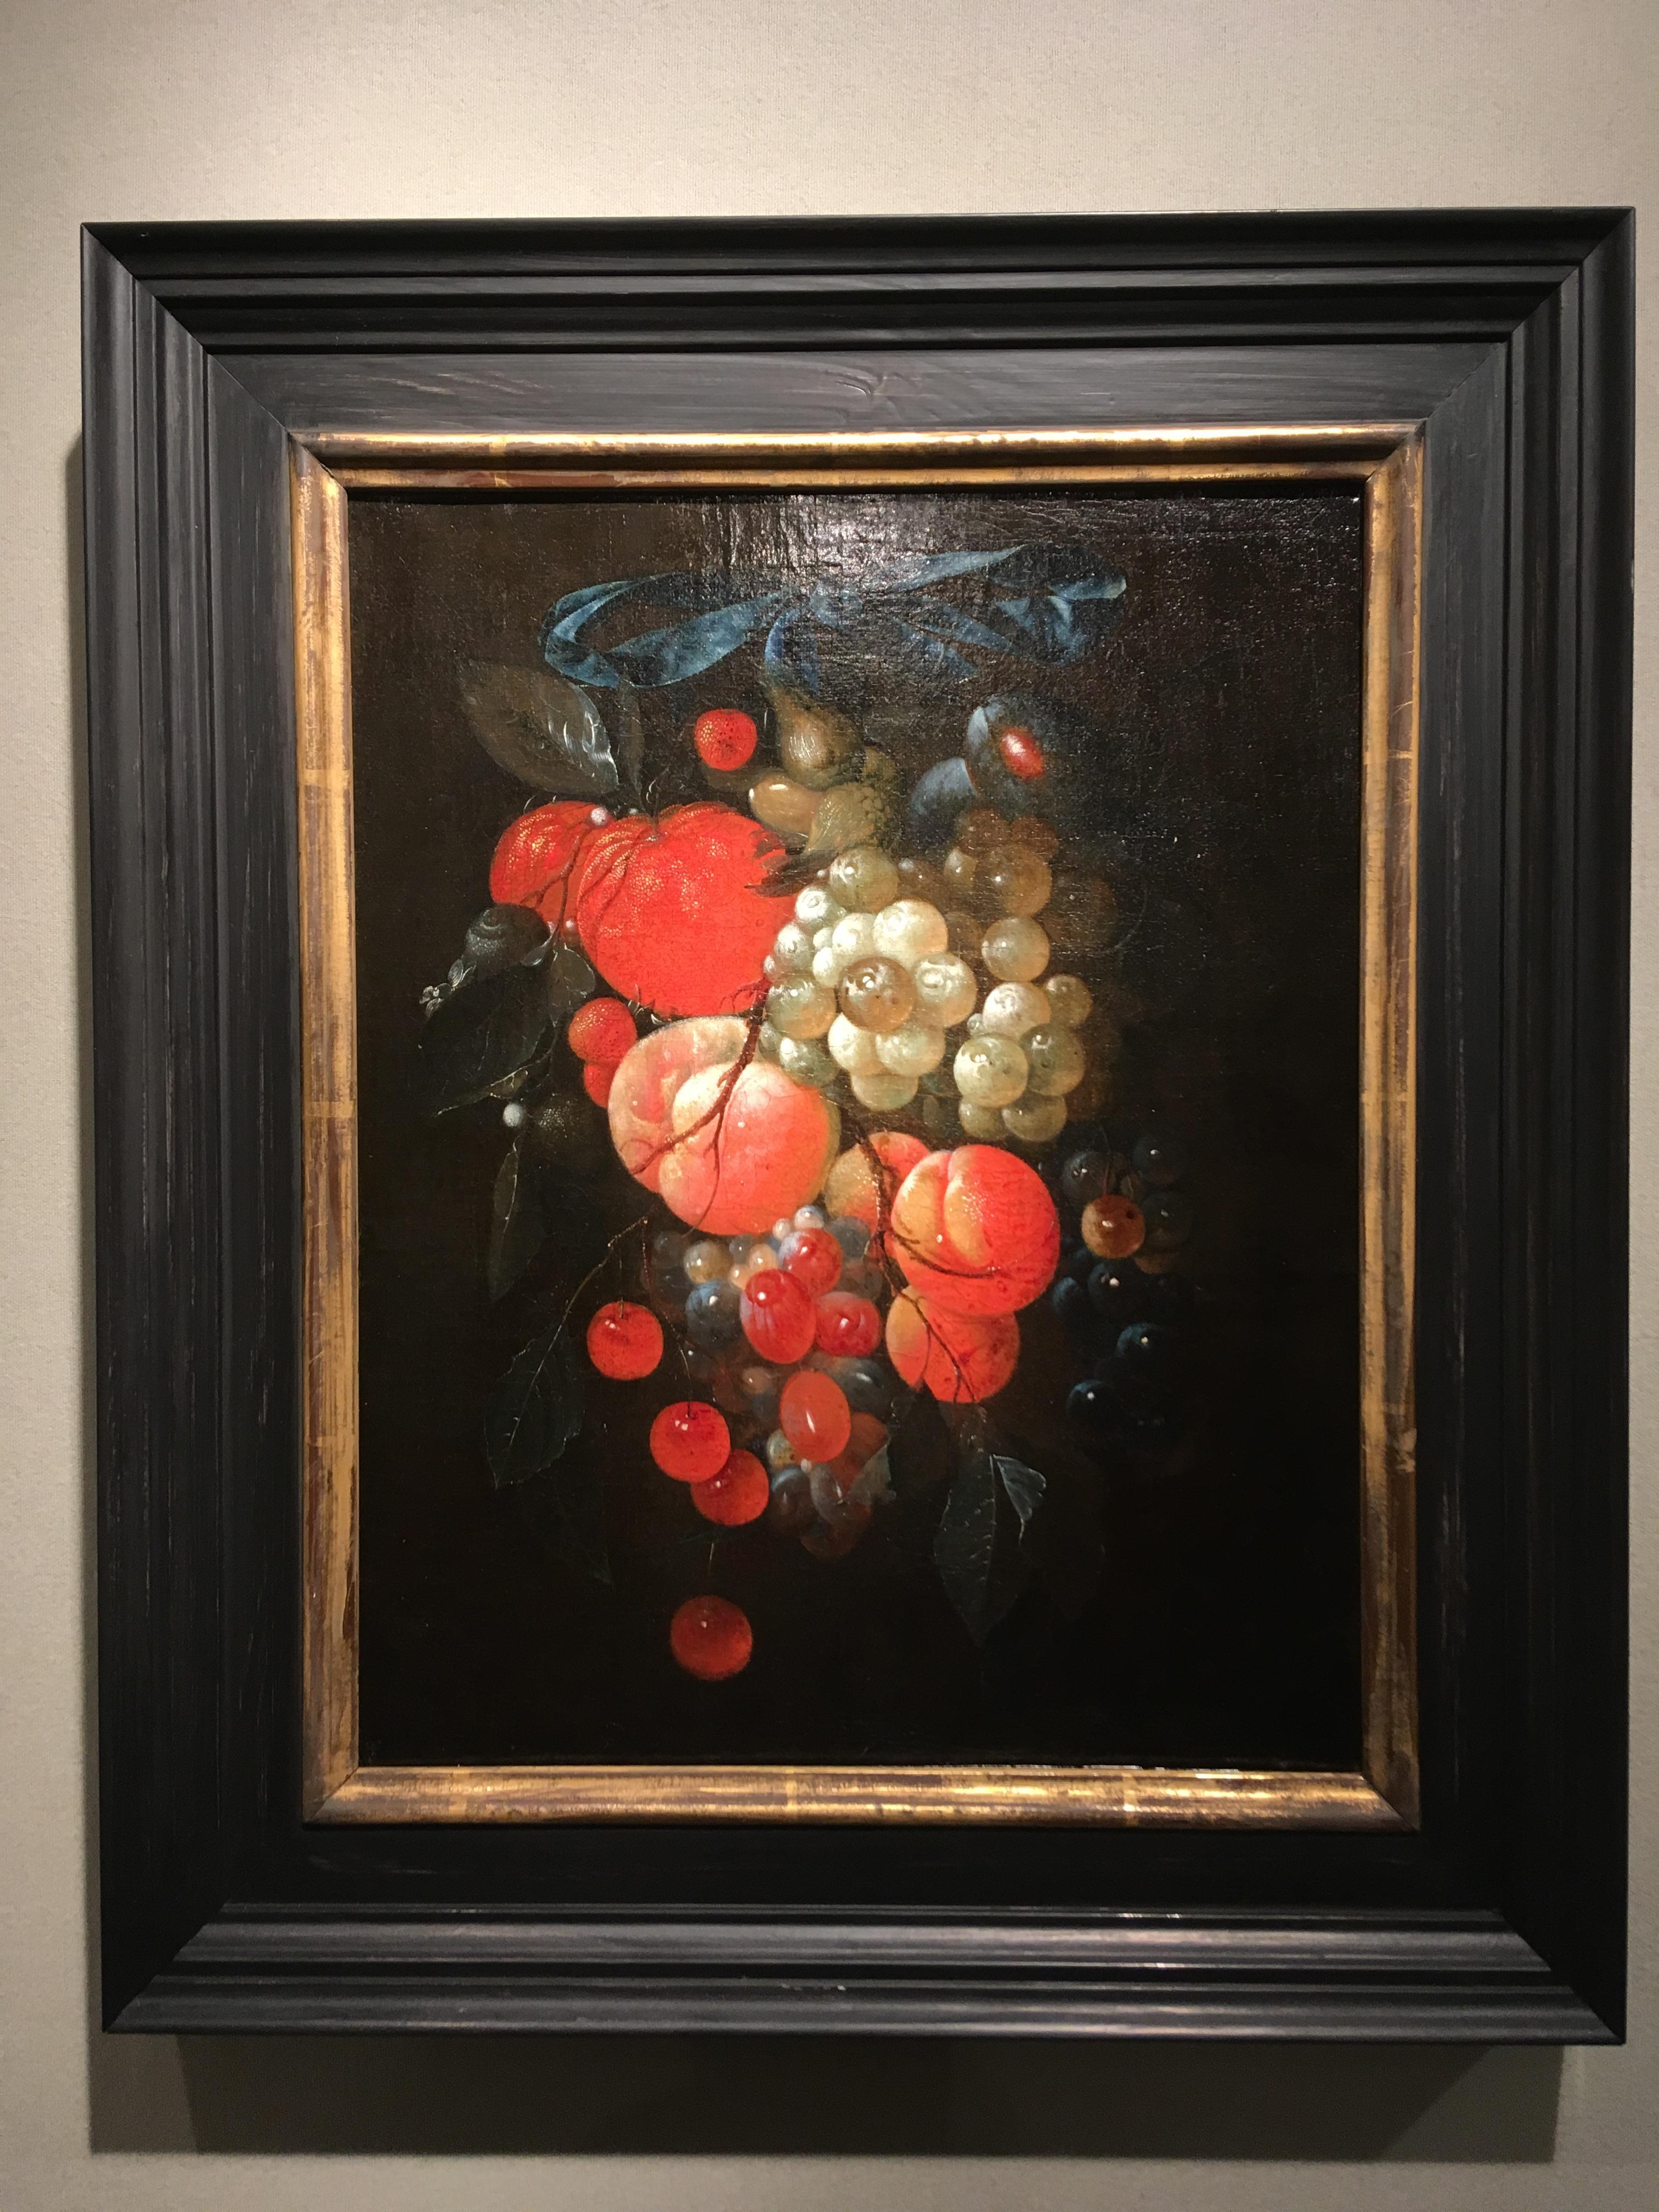  Festoon of Fruit, Still Life, Dutch Art, Circle of Cornelis De Heem, Old Master - Painting by Cornelis de Heem